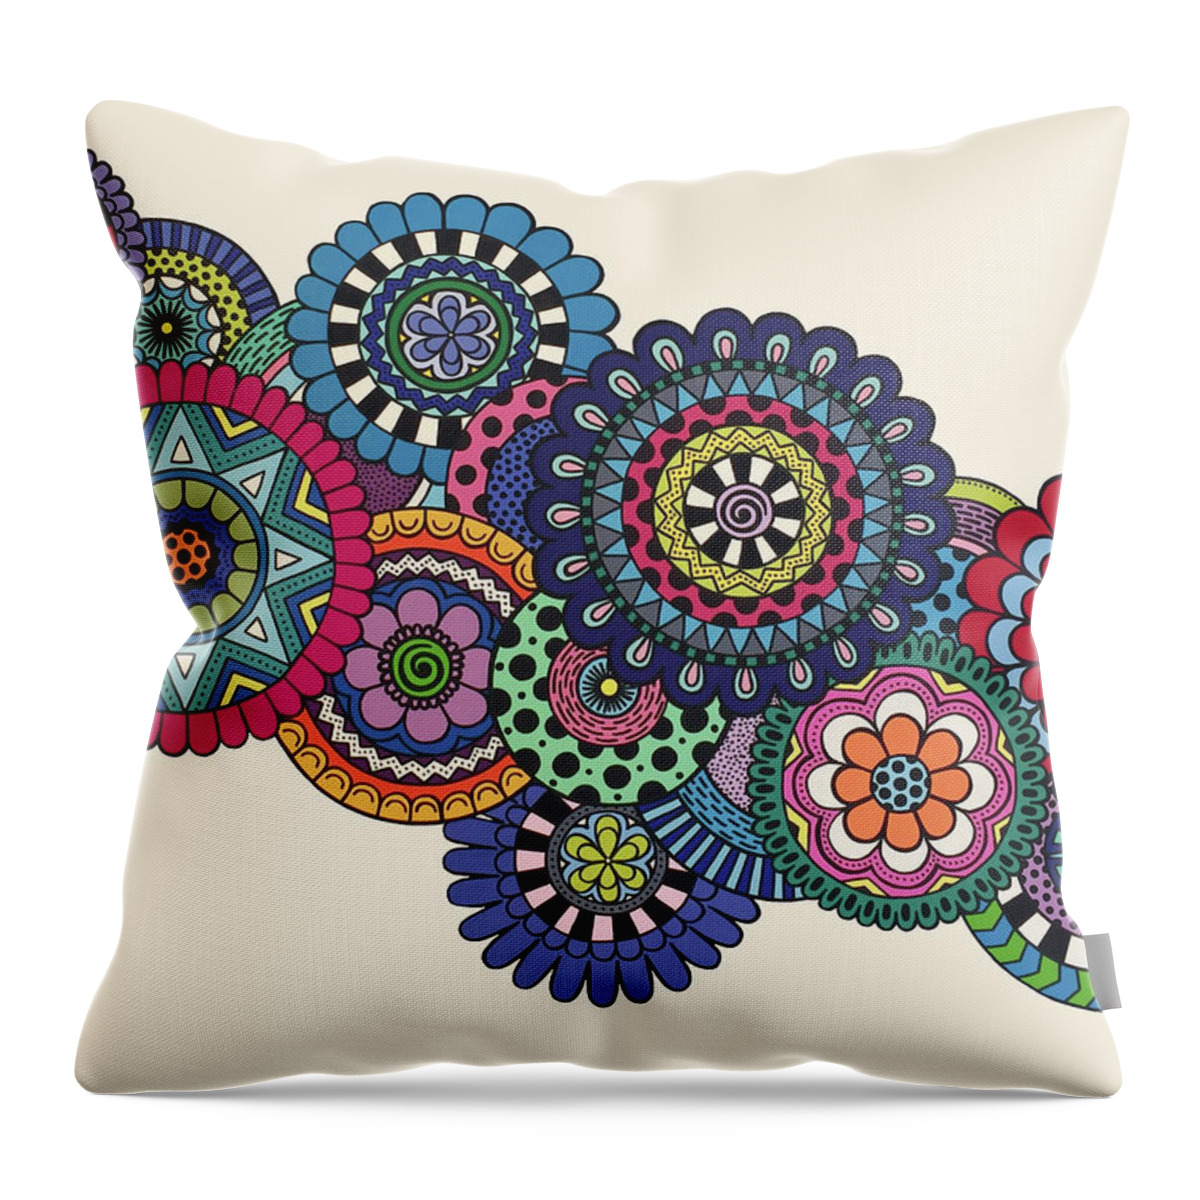 Mandala Throw Pillow featuring the painting Mandalas on Ivory by Beth Ann Scott